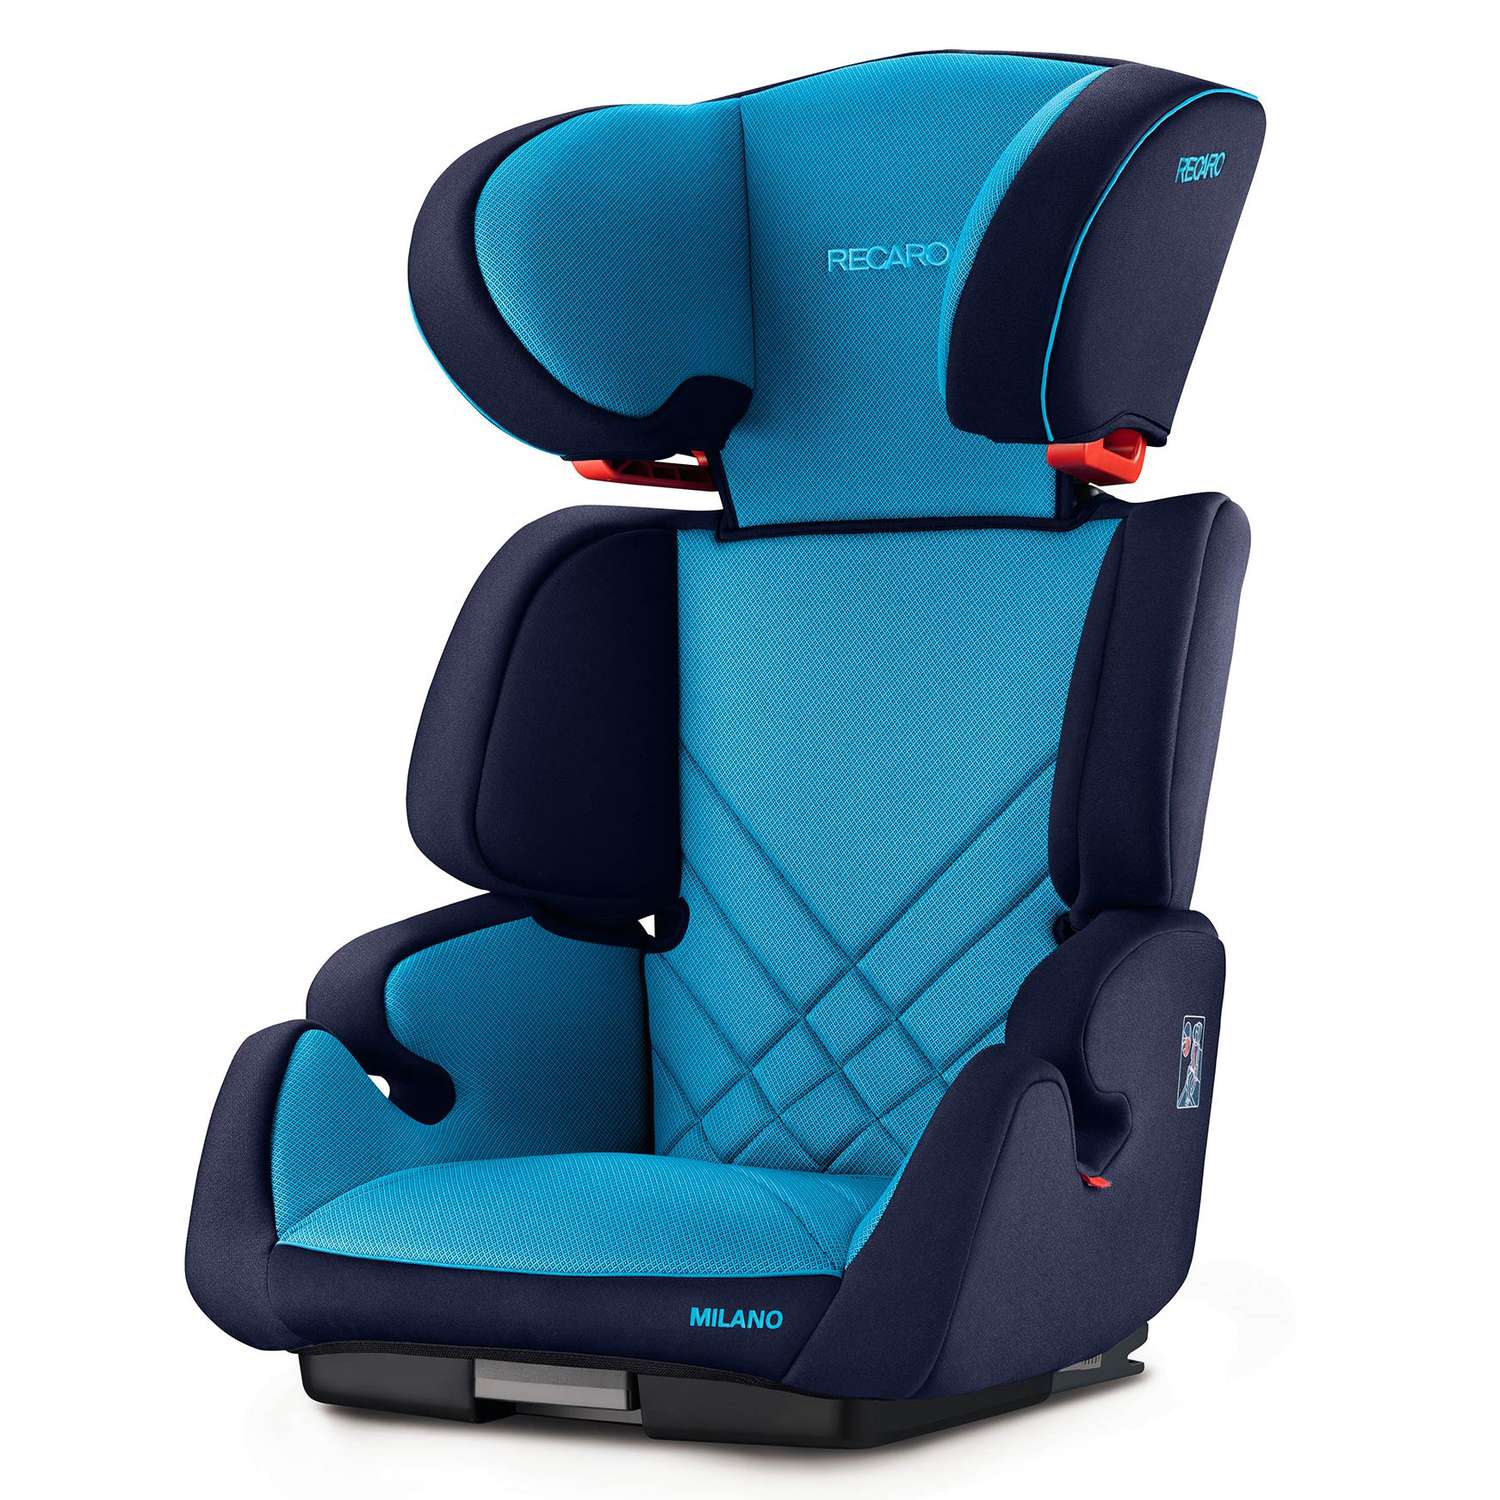 Автокресло Recaro Milano Seatfix Xenon Blue - фото 1